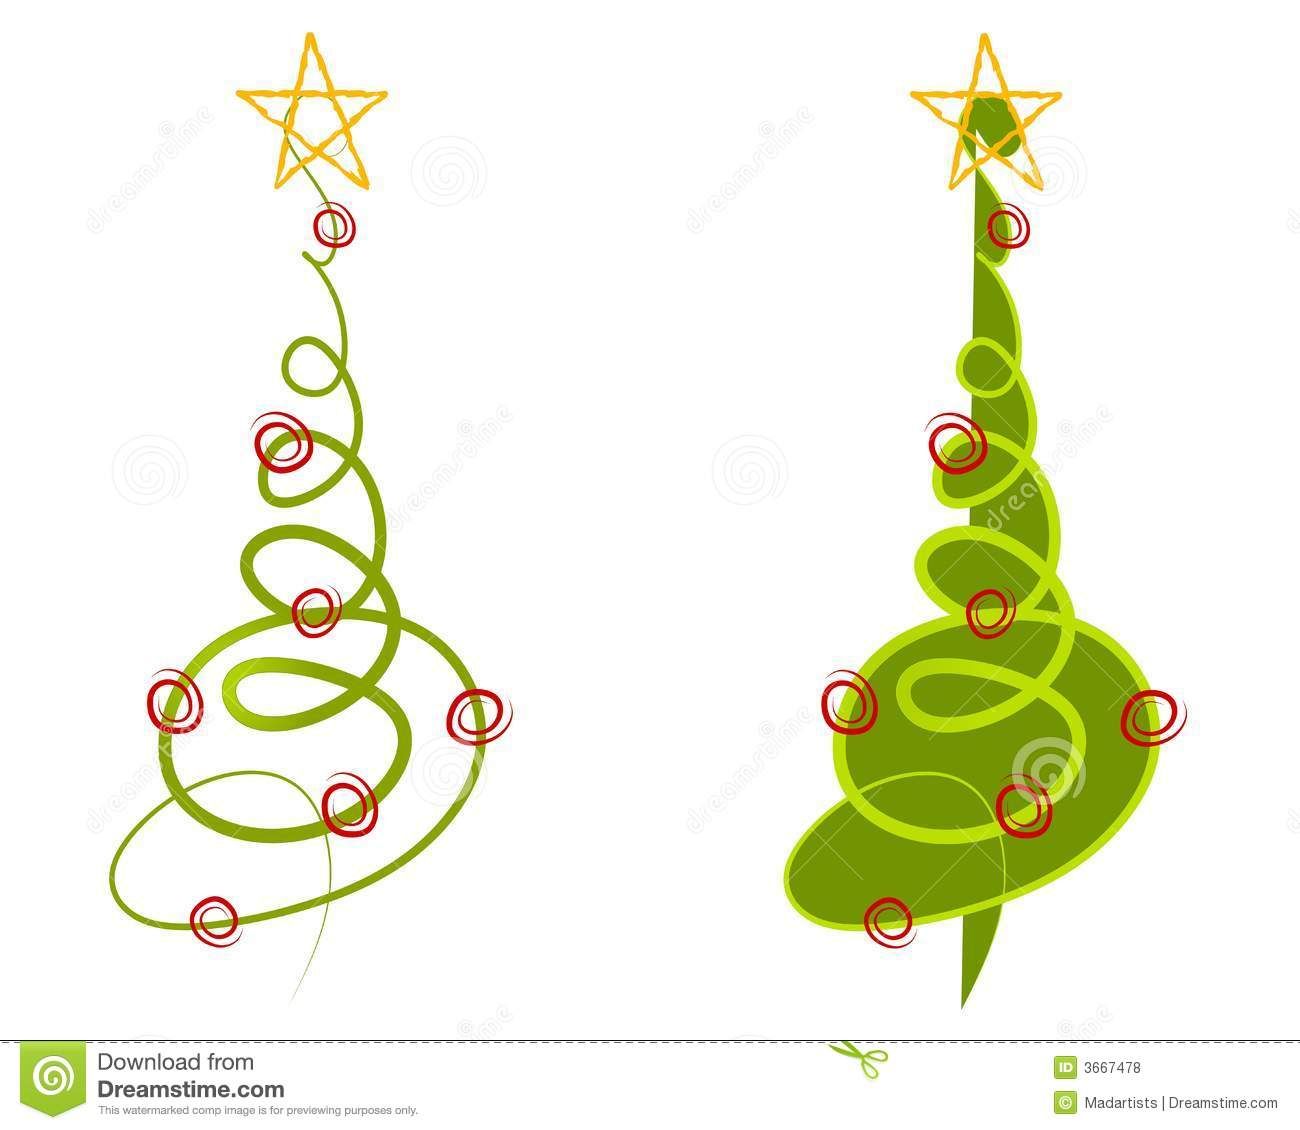 Abstract Christmas Tree Clip Art Royalty Free Stock Photos.